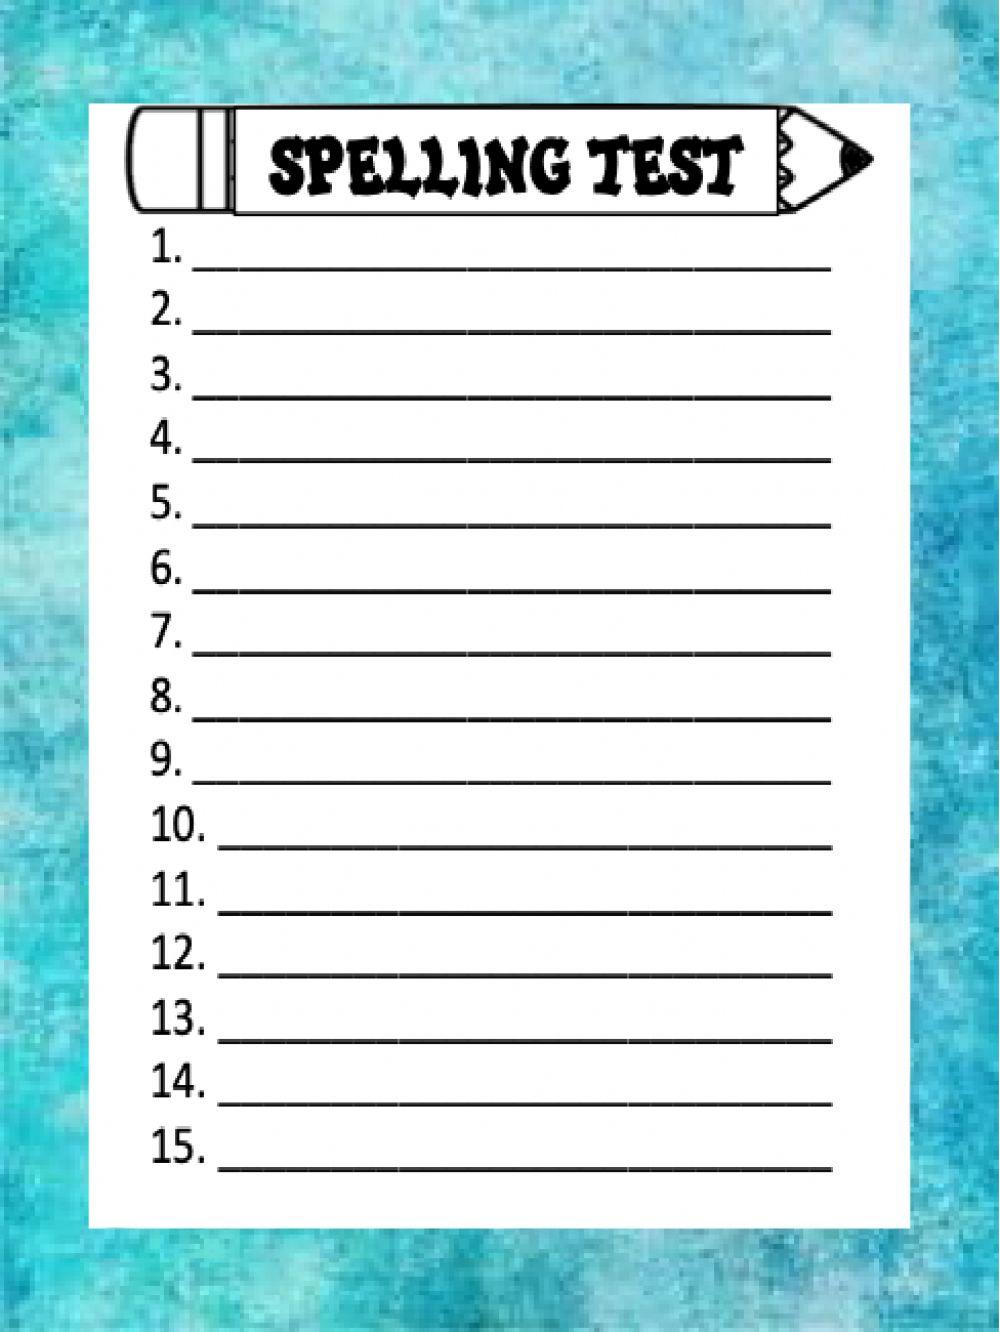 Spelling Assessment, Mod2, week3